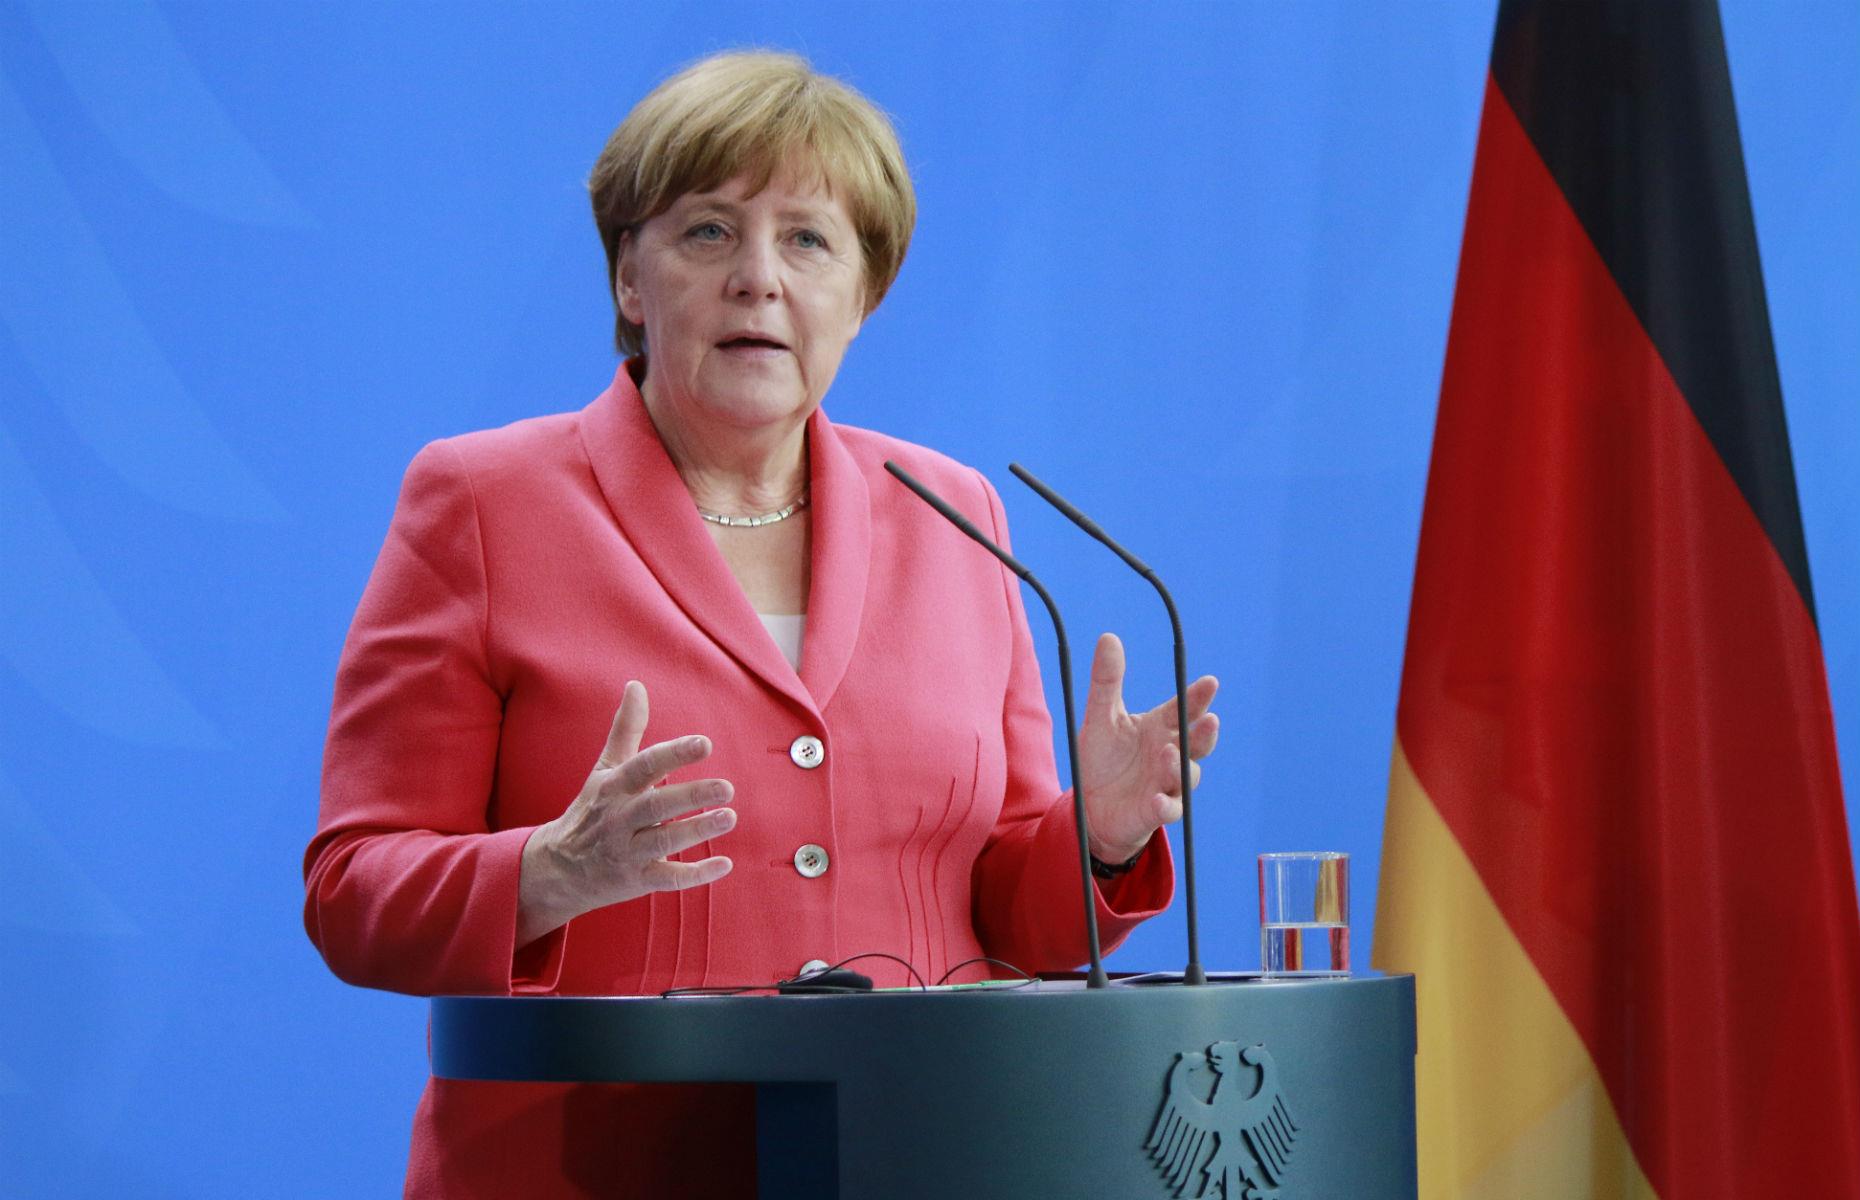 Angela Merkel, former Chancellor of Germany: Barmaid 